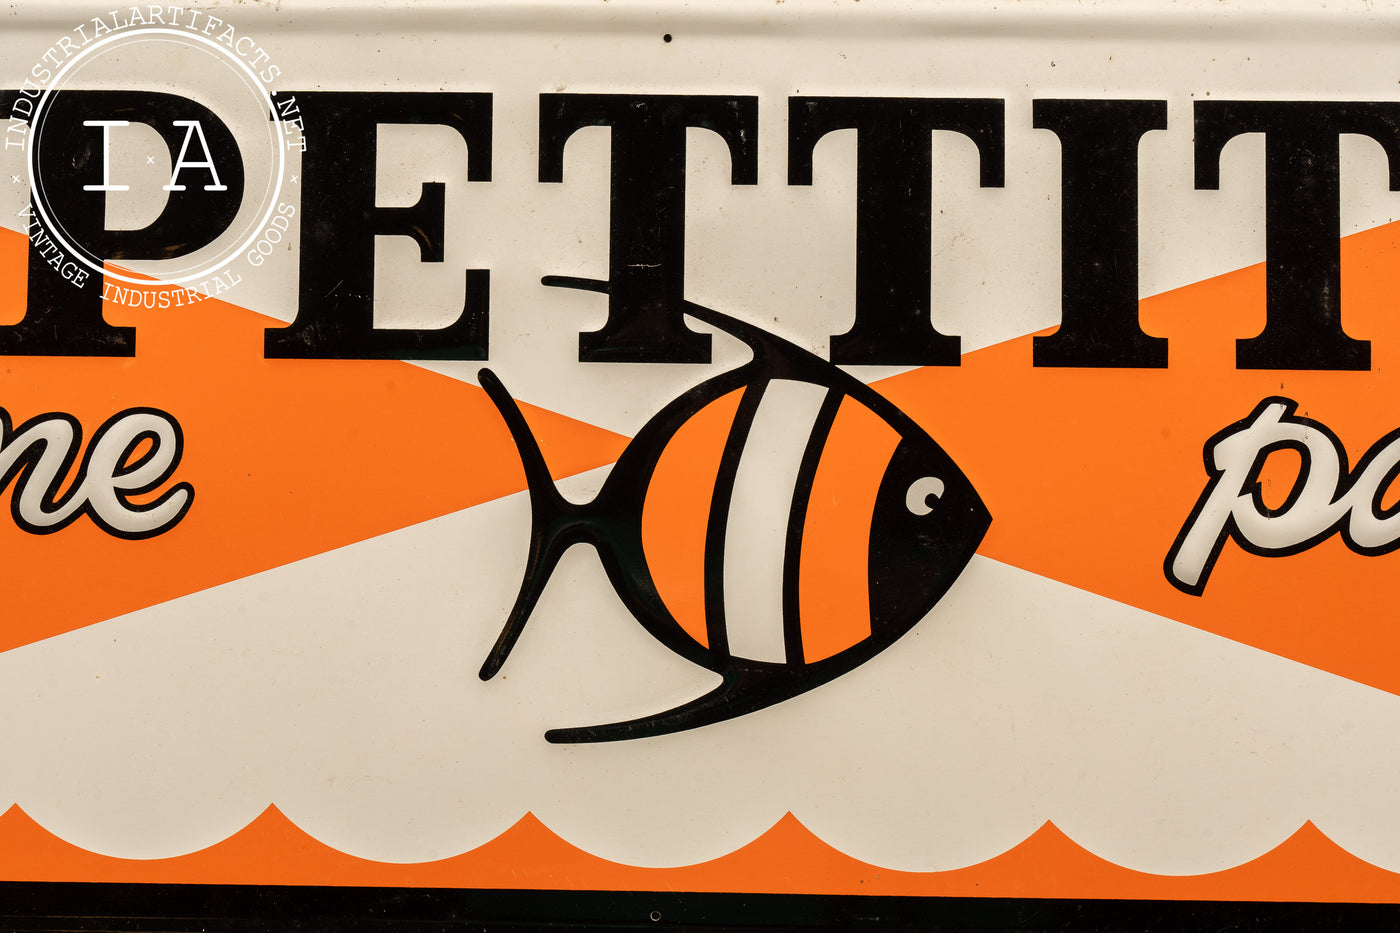 Vintage Pettit Marine Paints SST Advertising Sign